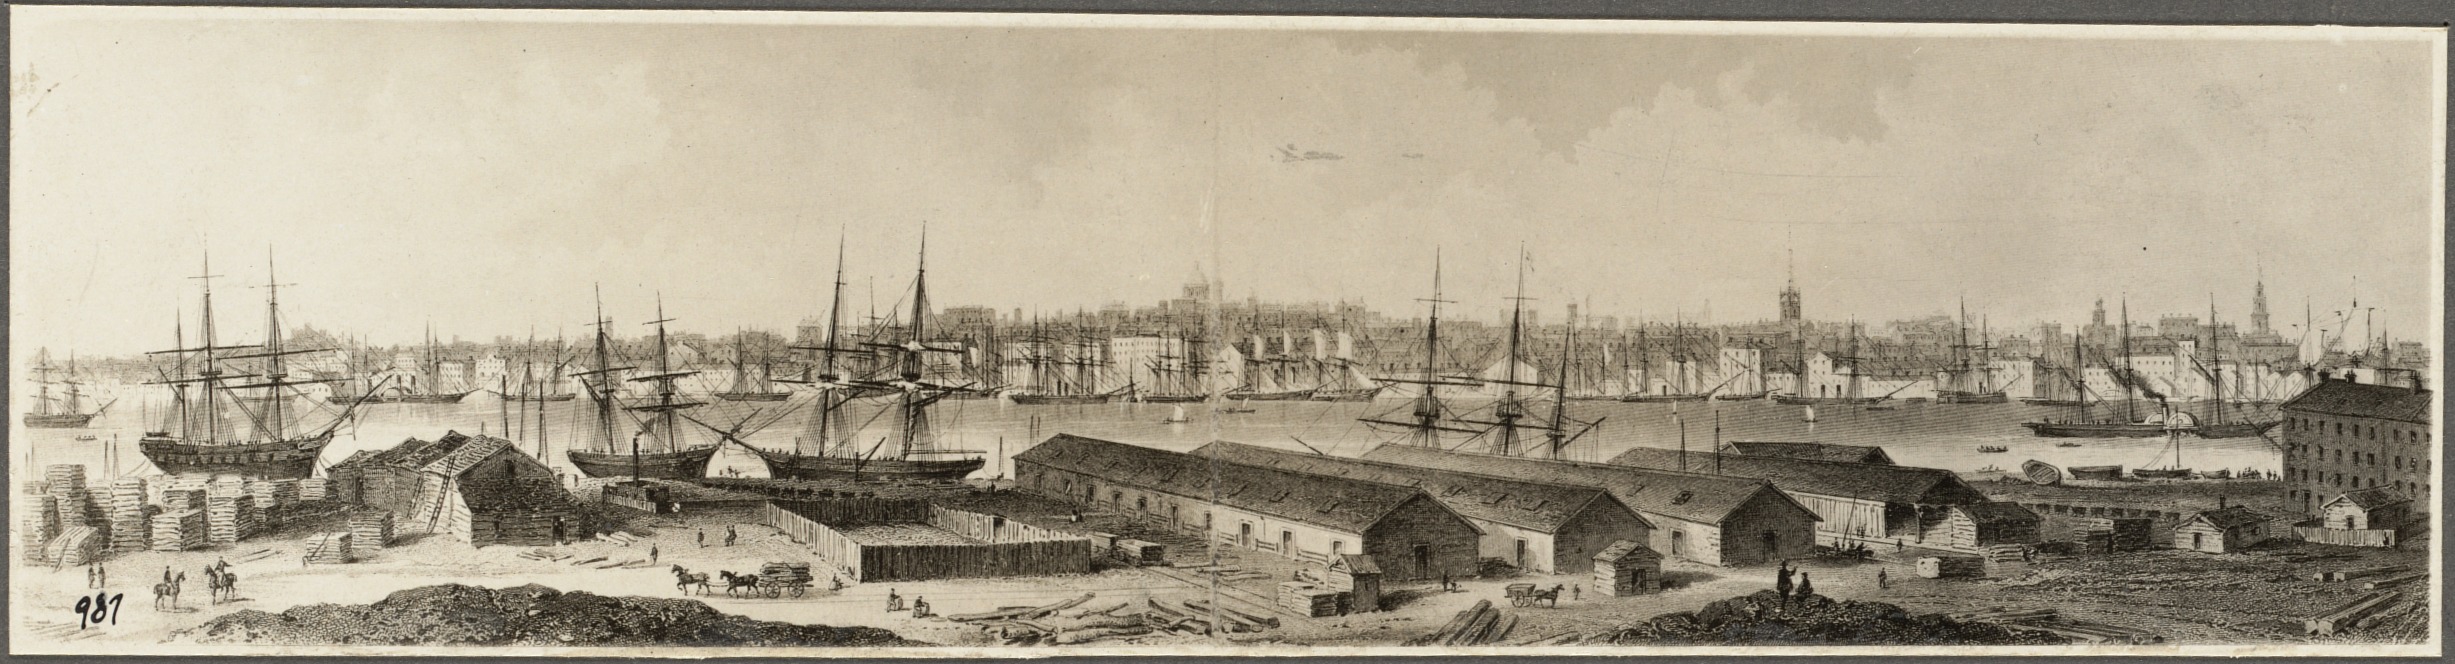 Massachusetts. Boston from East Boston, 1848